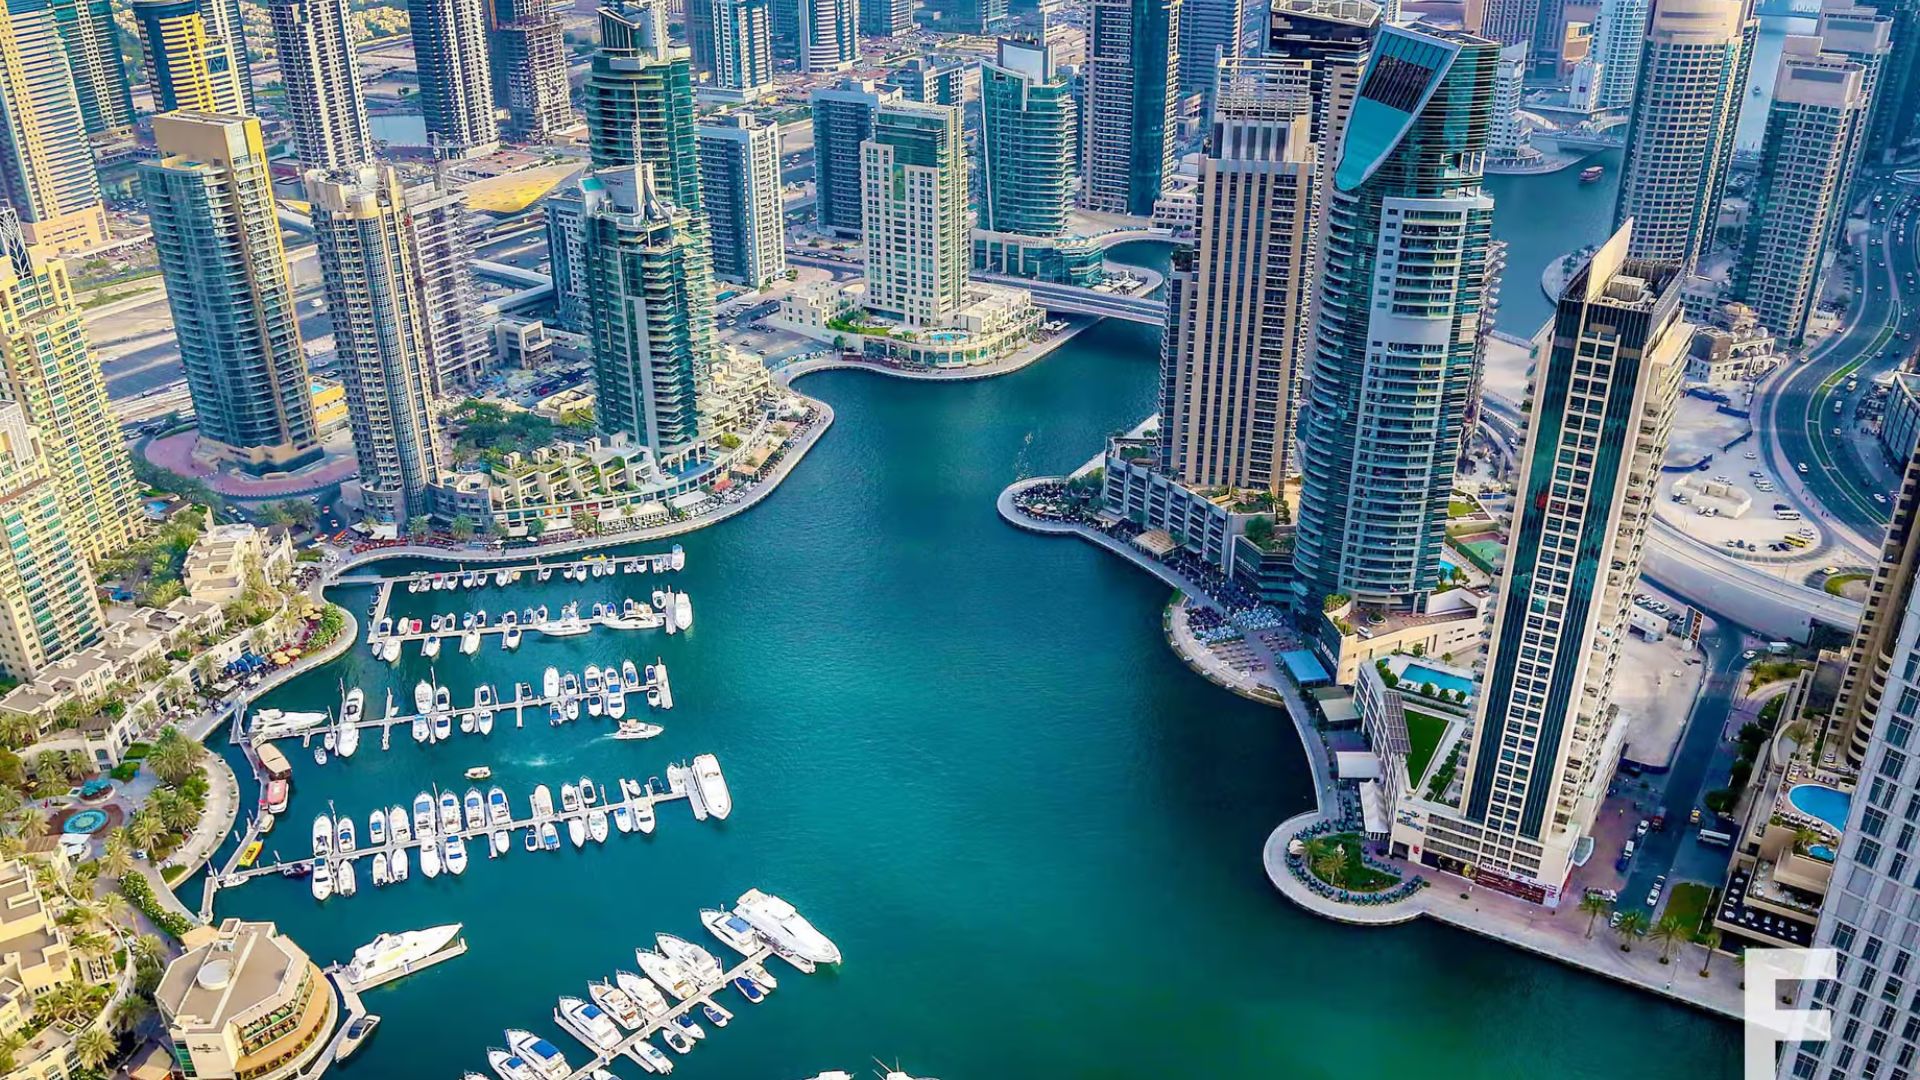 About Dubai Marina